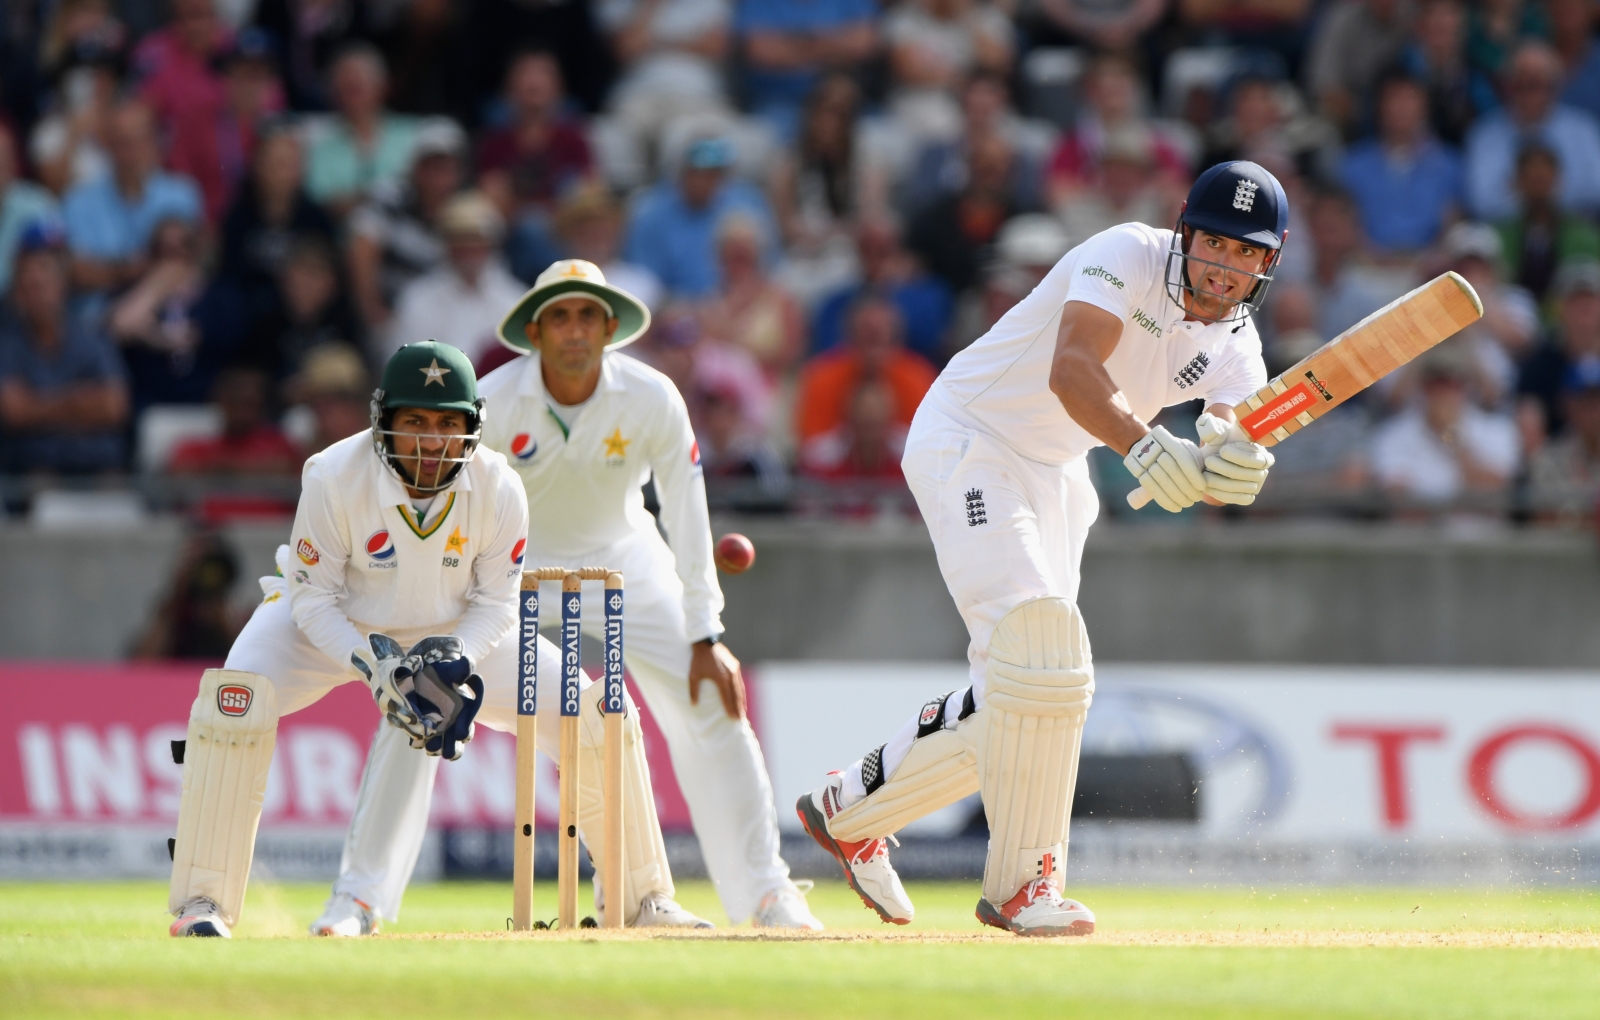 Alastair Cook leads England's fightback on day three at Edgbaston with unbeaten innings